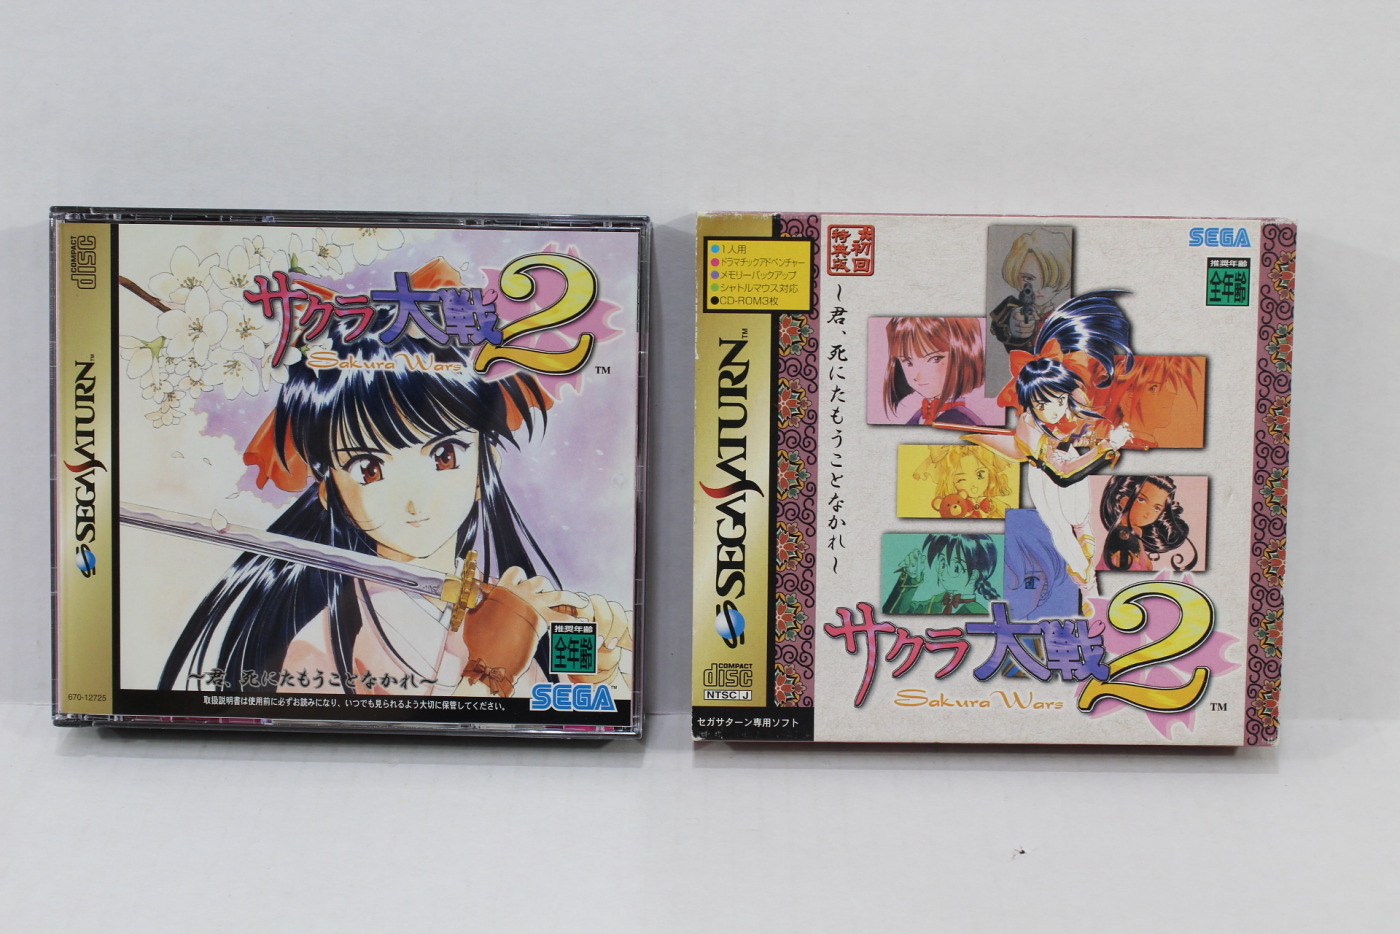 Lot of 2 Sakura Wars Taisen 1 & 2 Limited Edition SS (B)